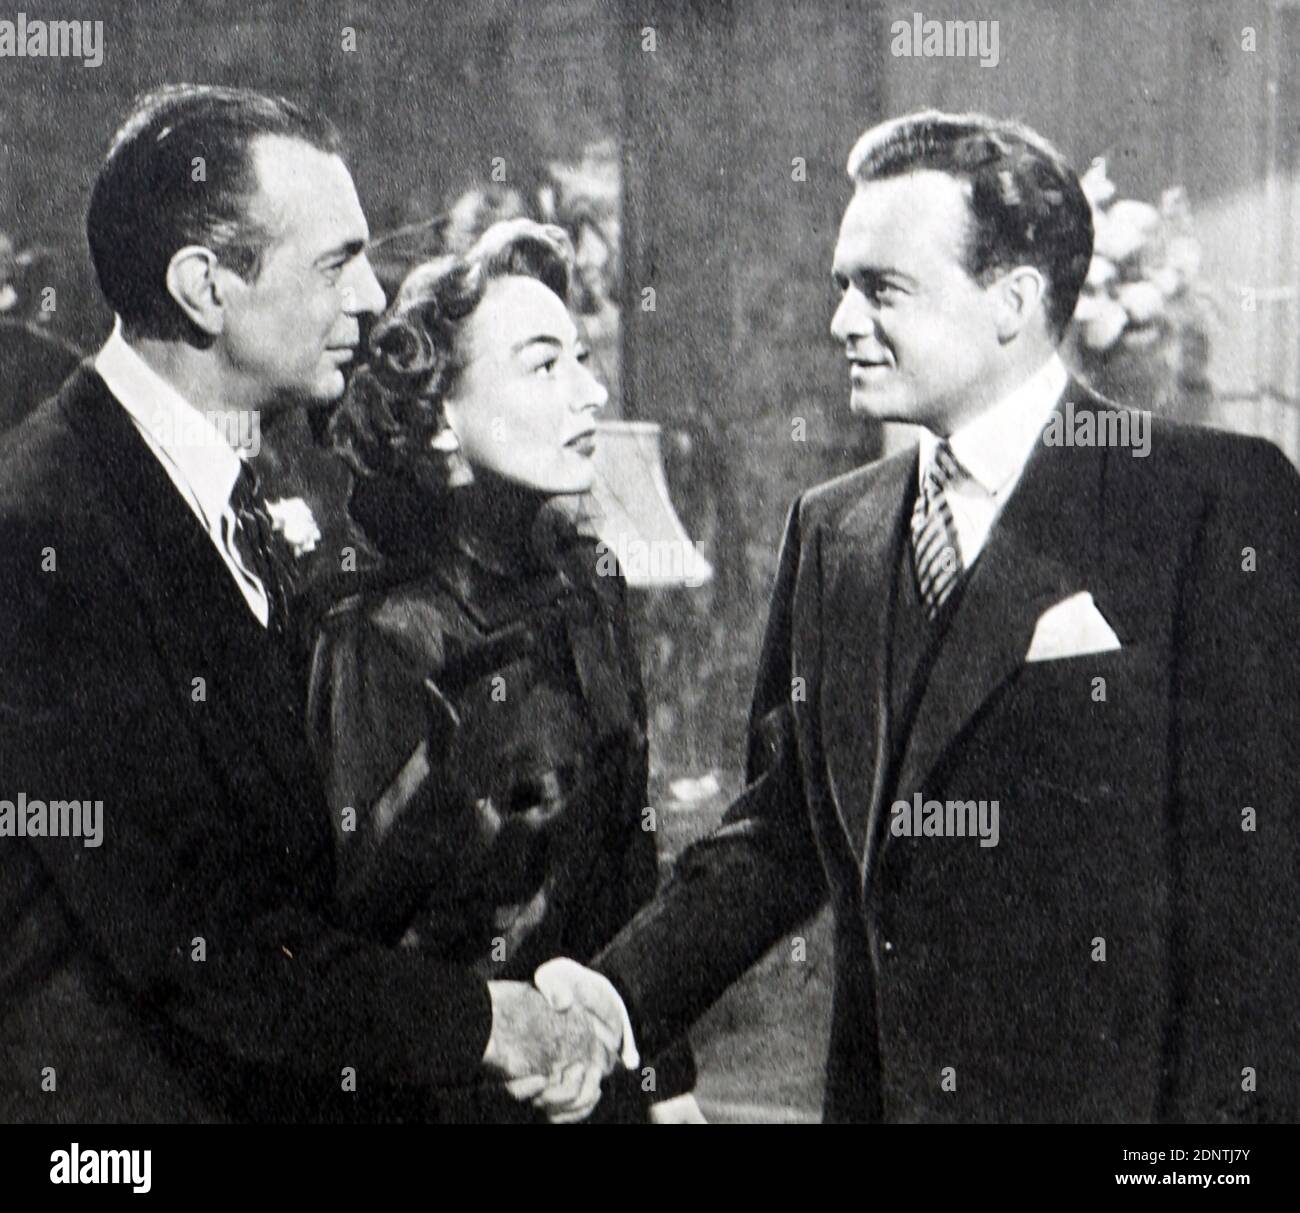 Film still from 'Possessed' starring Joan Crawford, Van Heflin, Raymond Massey, and Geraldine Brooks. Stock Photo